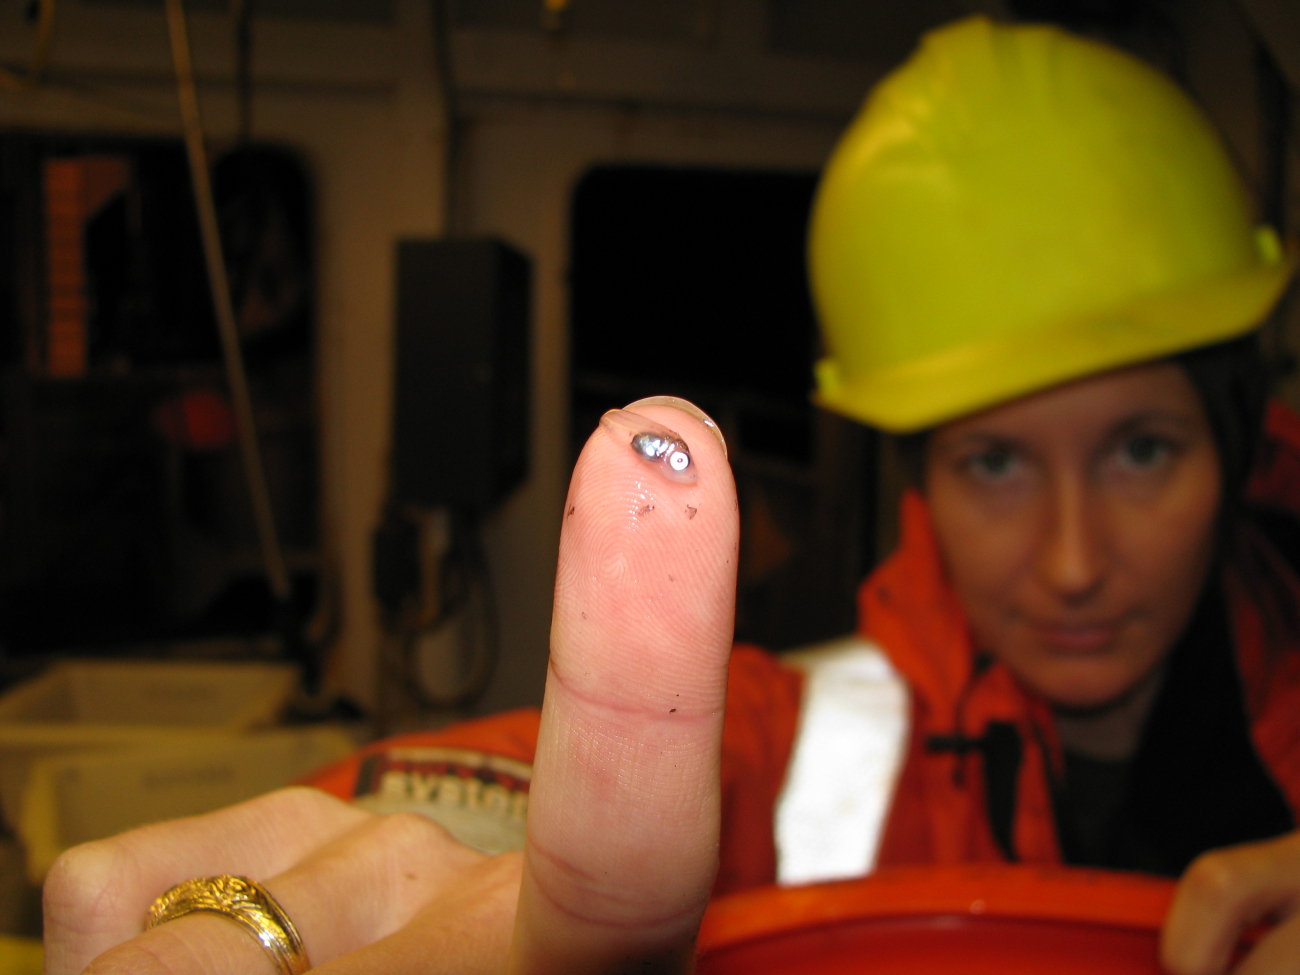 Teensy fish larva on tip of finger